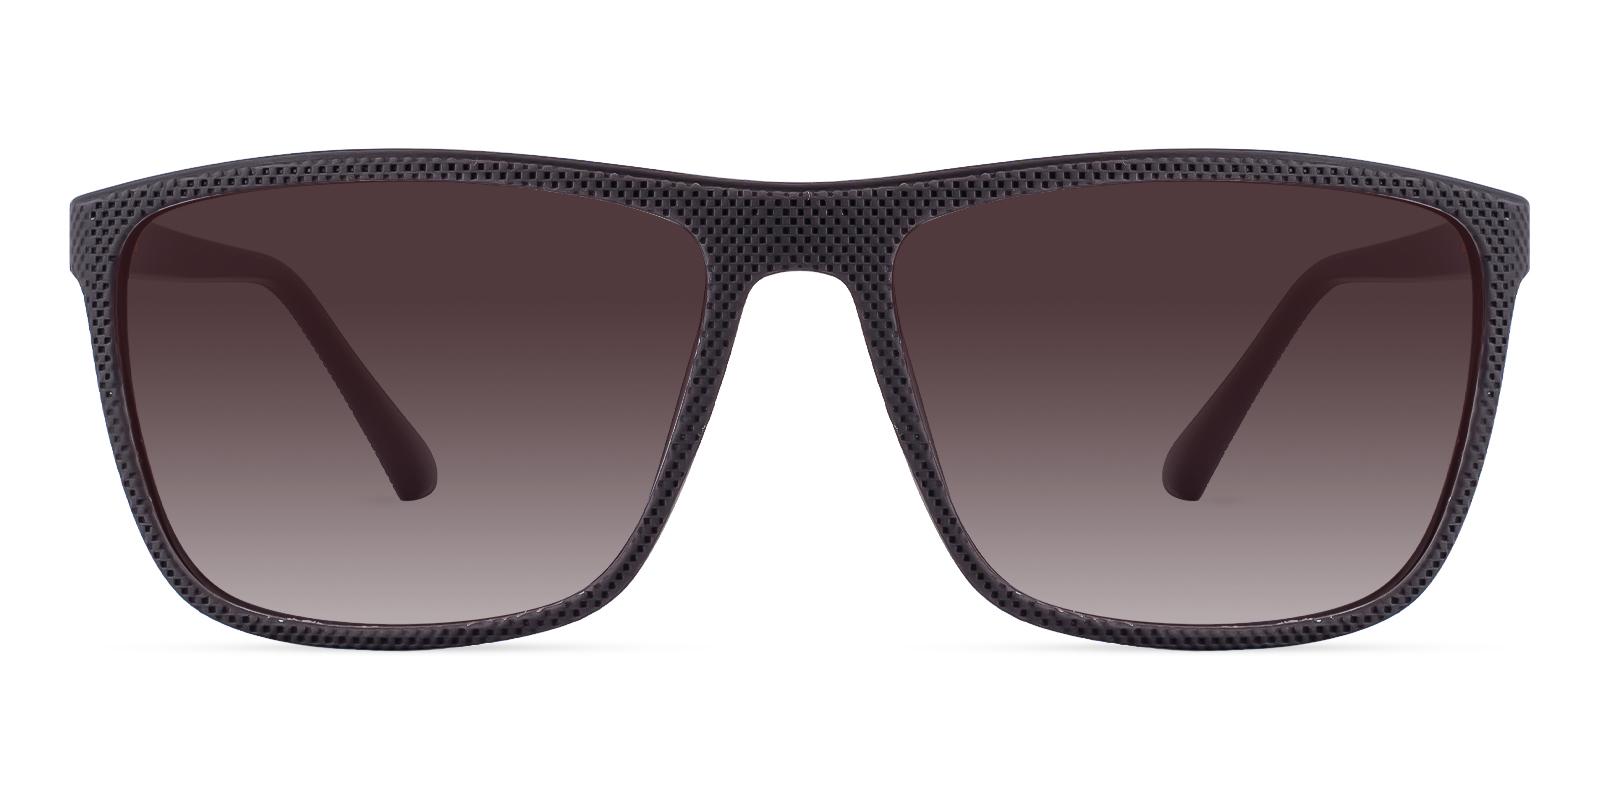 Naus Brown TR SpringHinges , Sunglasses , UniversalBridgeFit Frames from ABBE Glasses